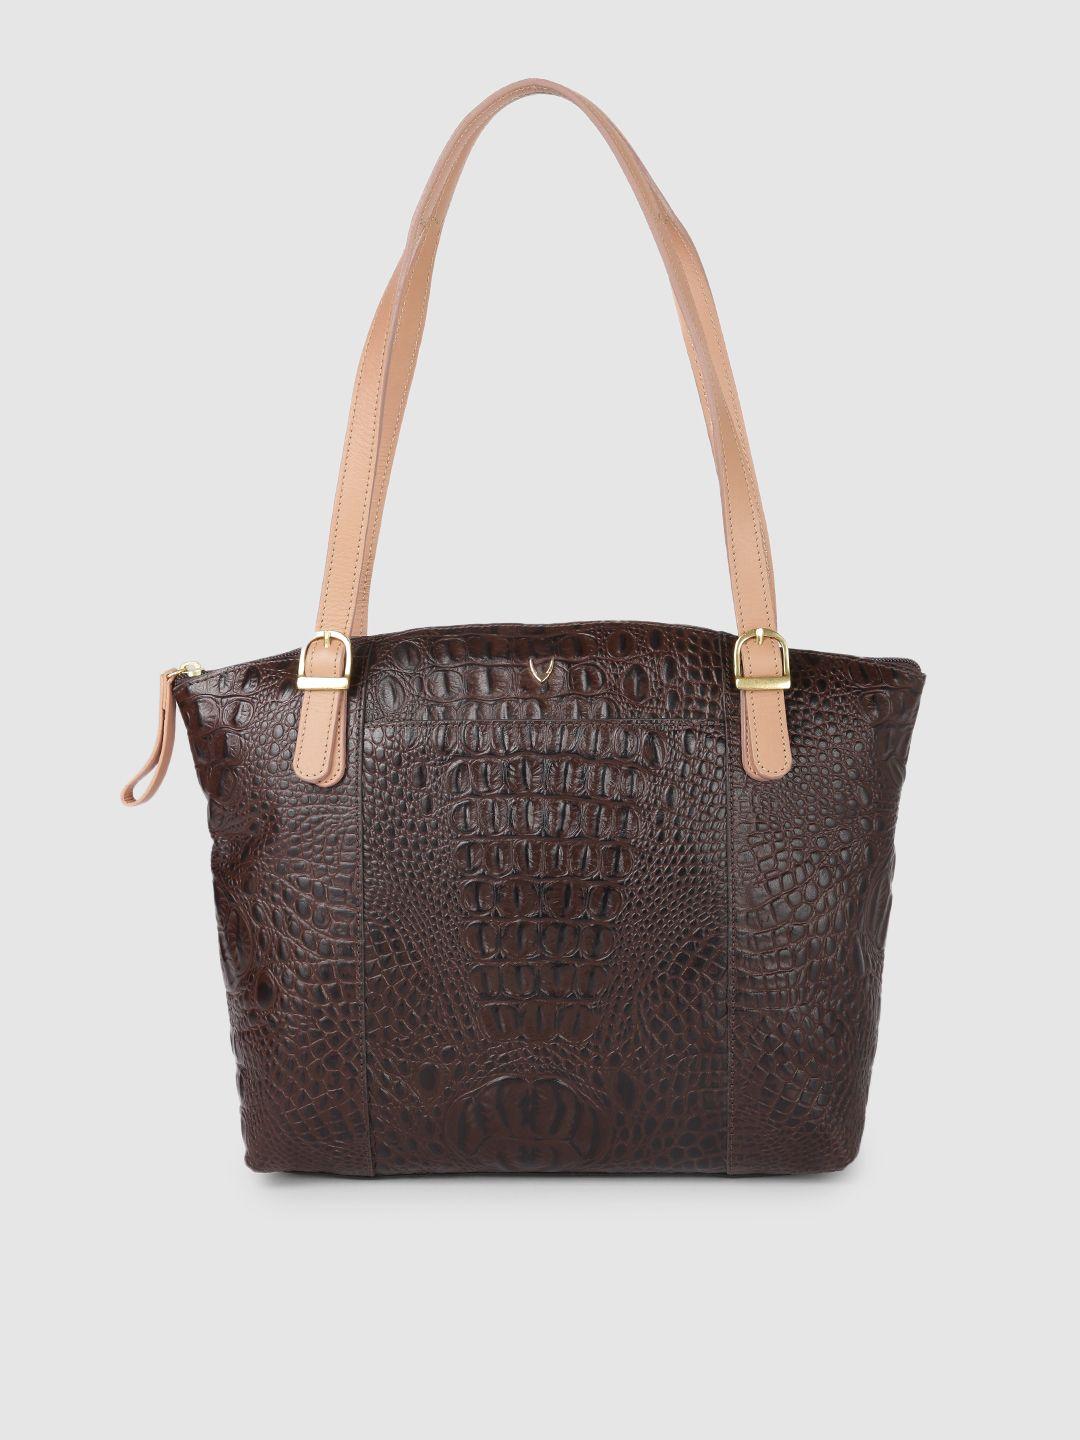 hidesign coffee brown animal textured leather regular structured shoulder bag